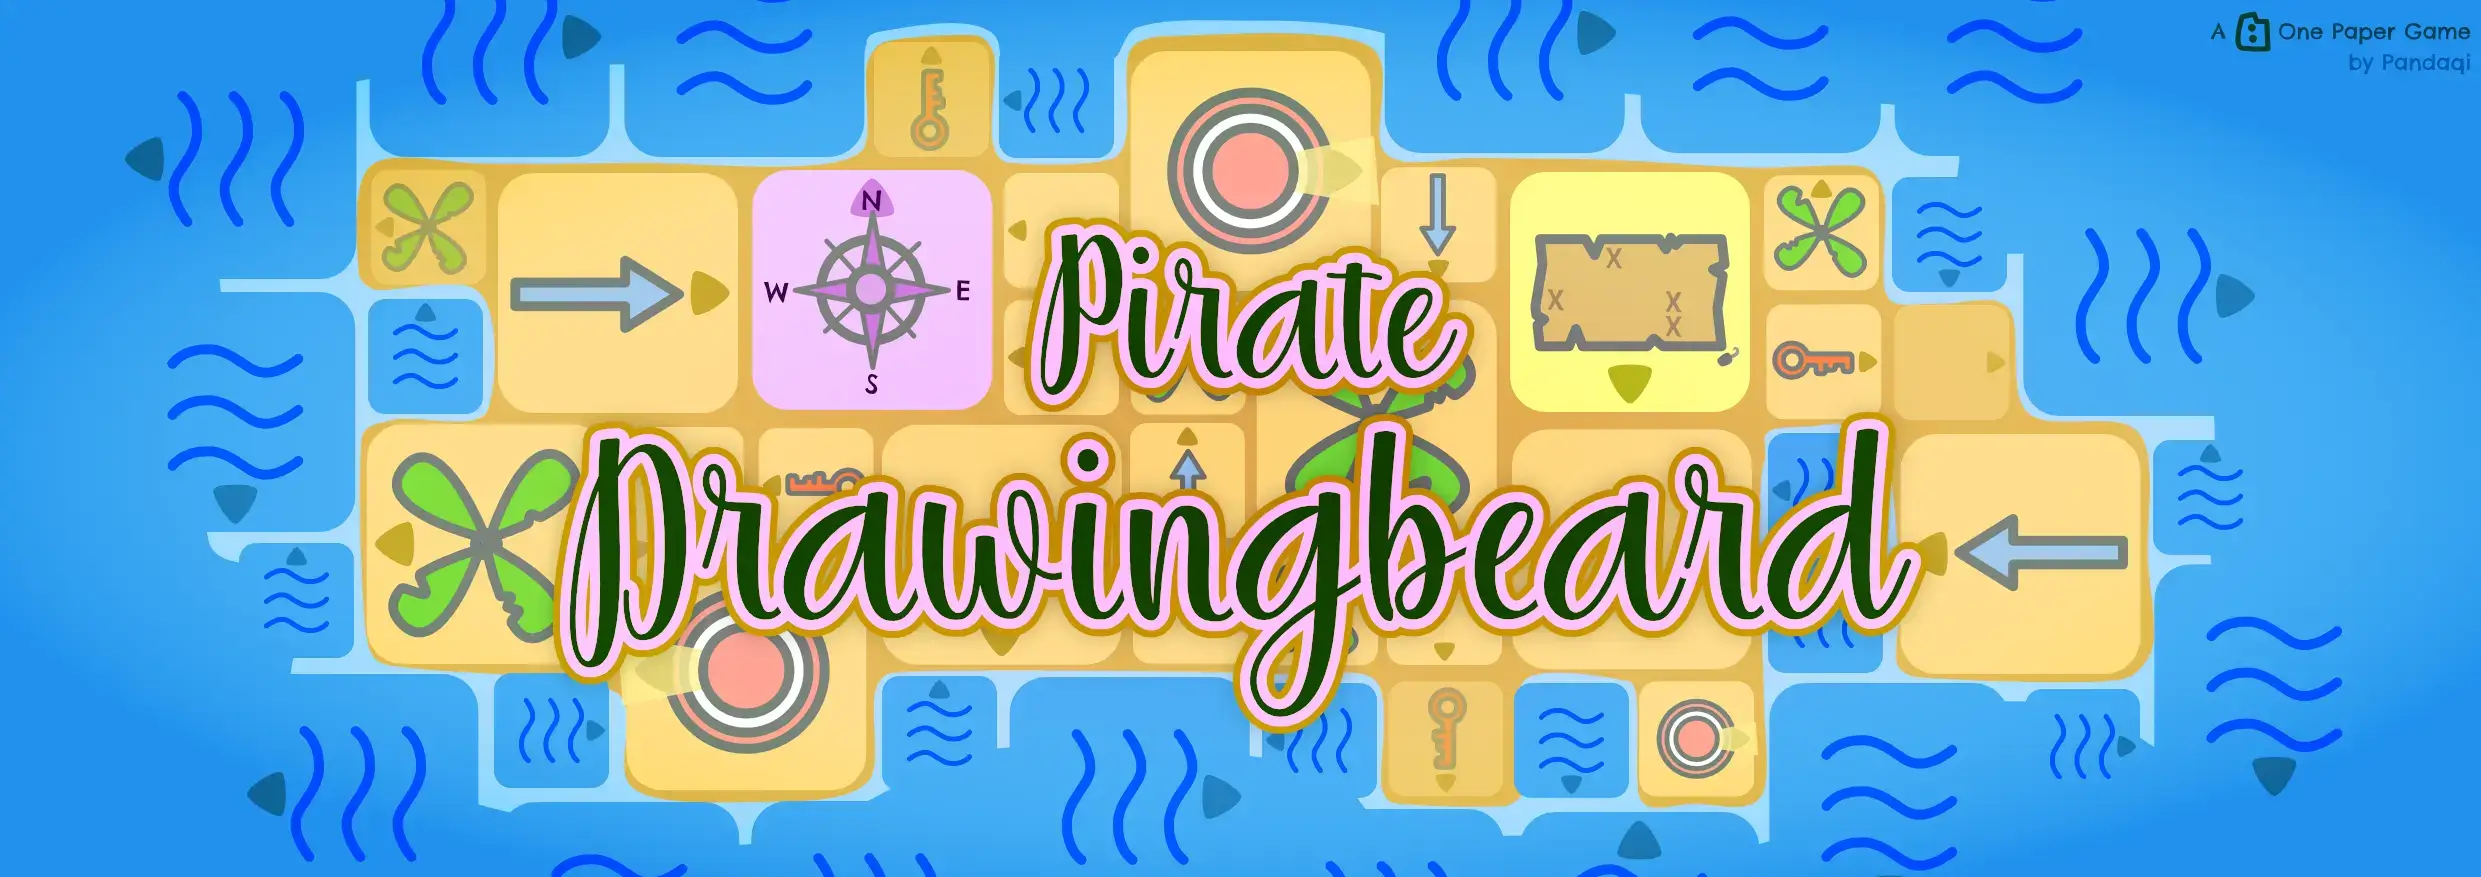 Pirate drawingbeard header